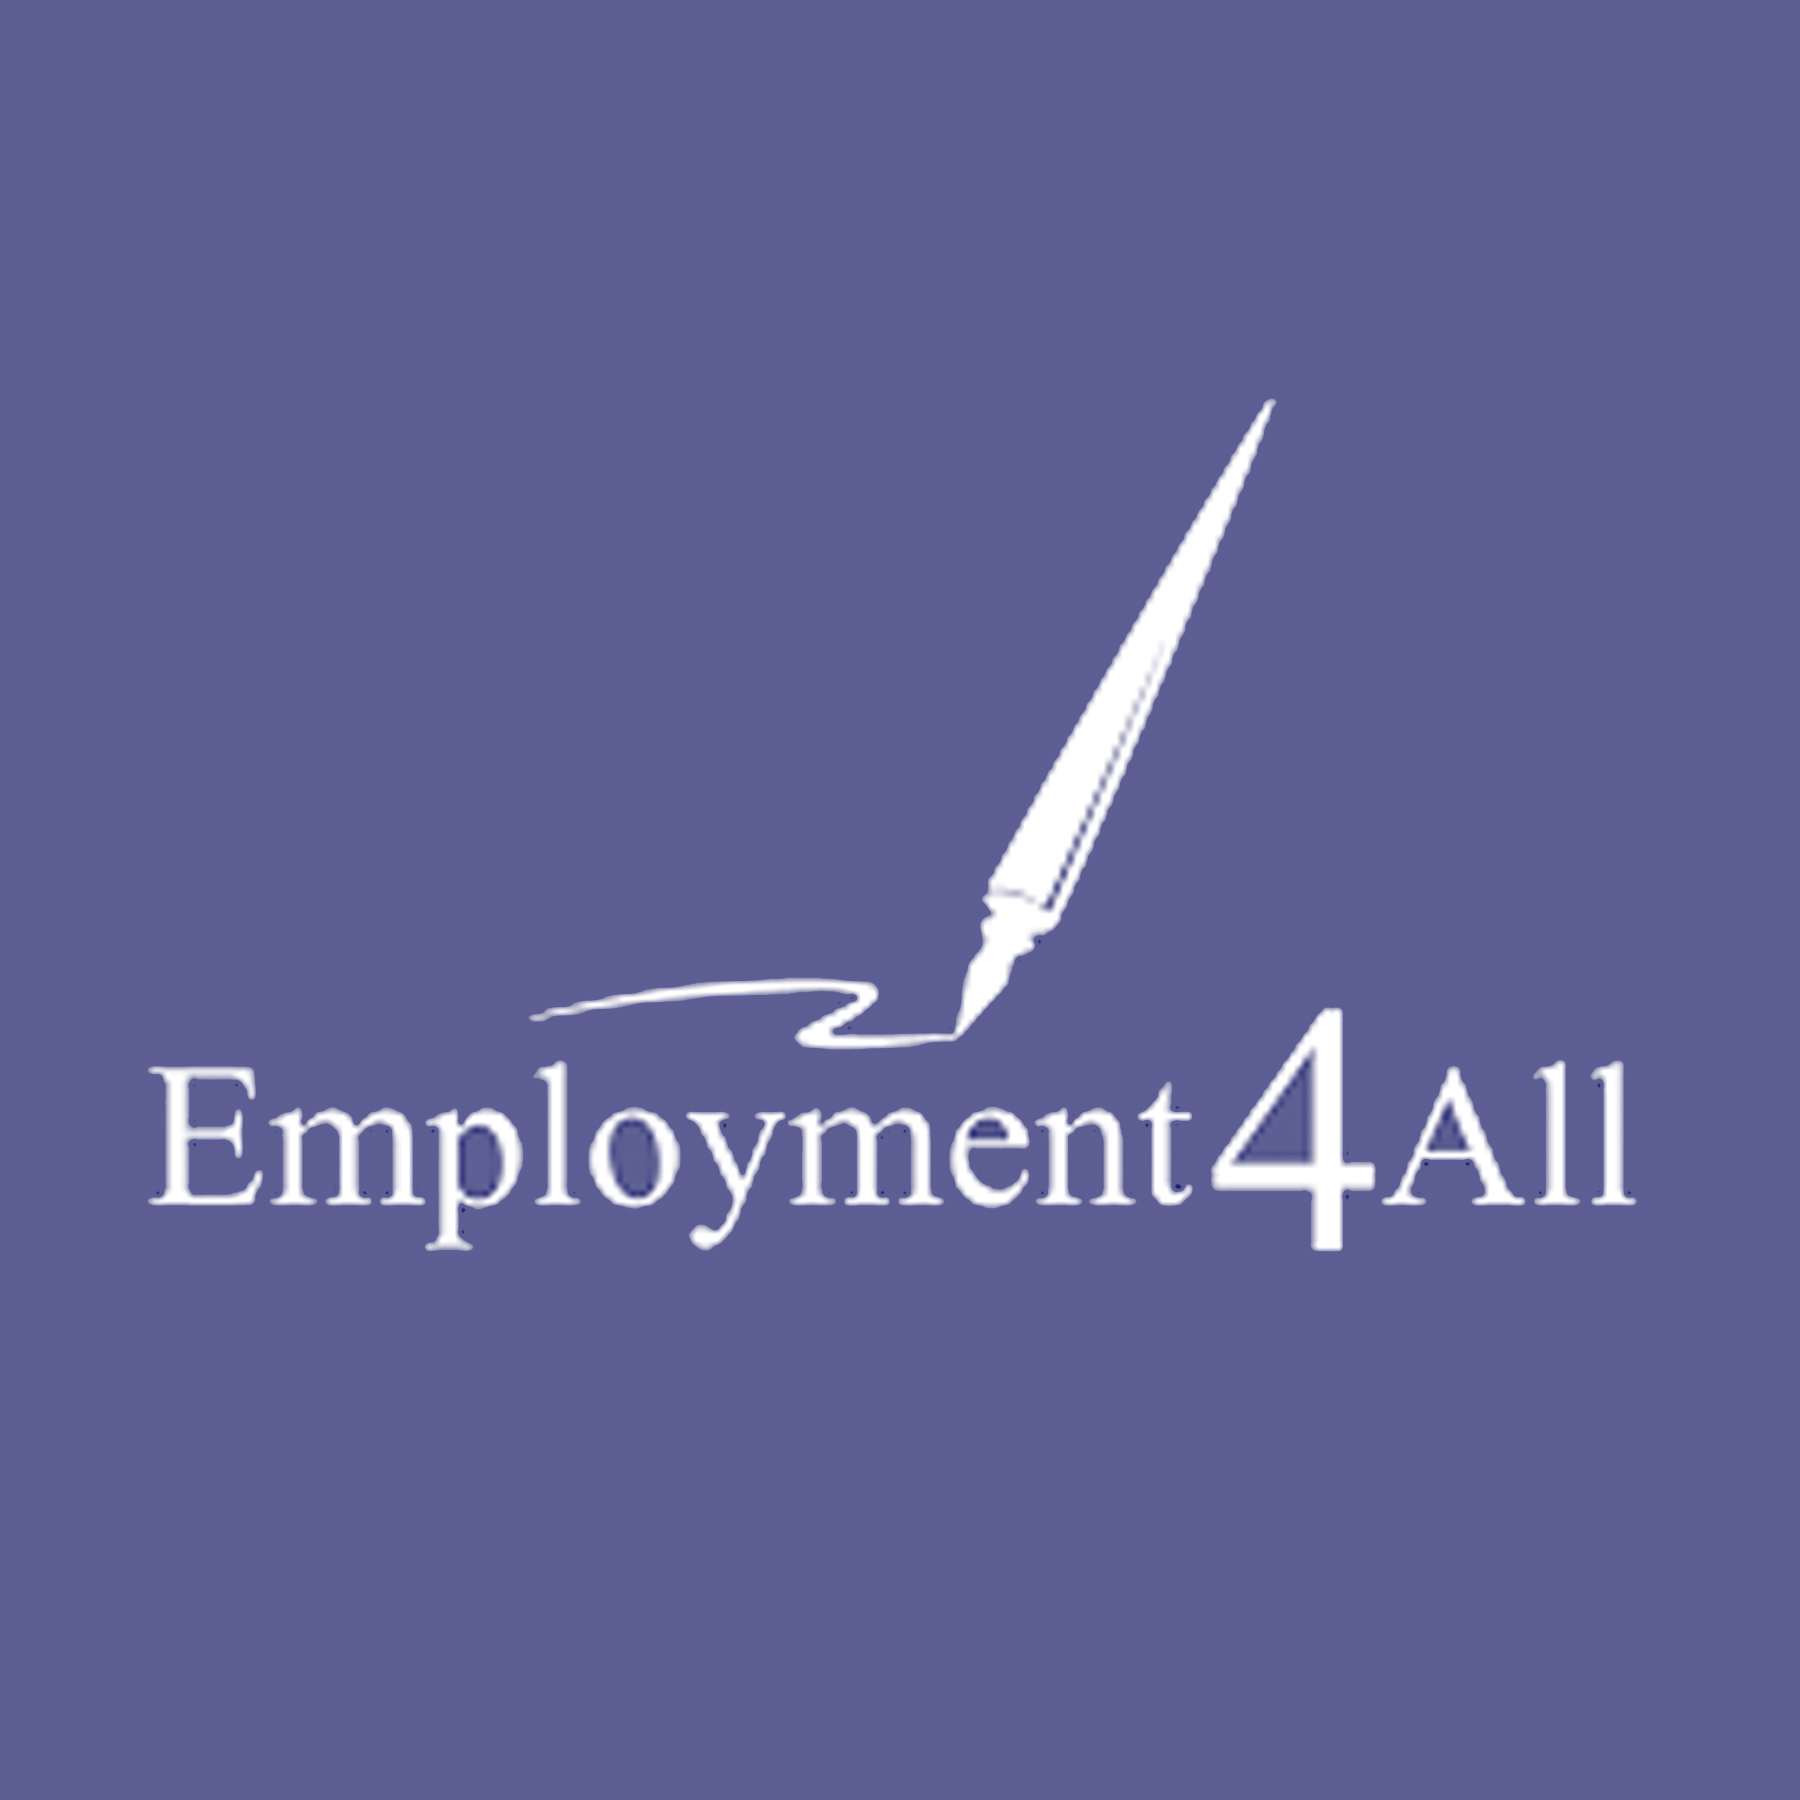 Employment 4 All